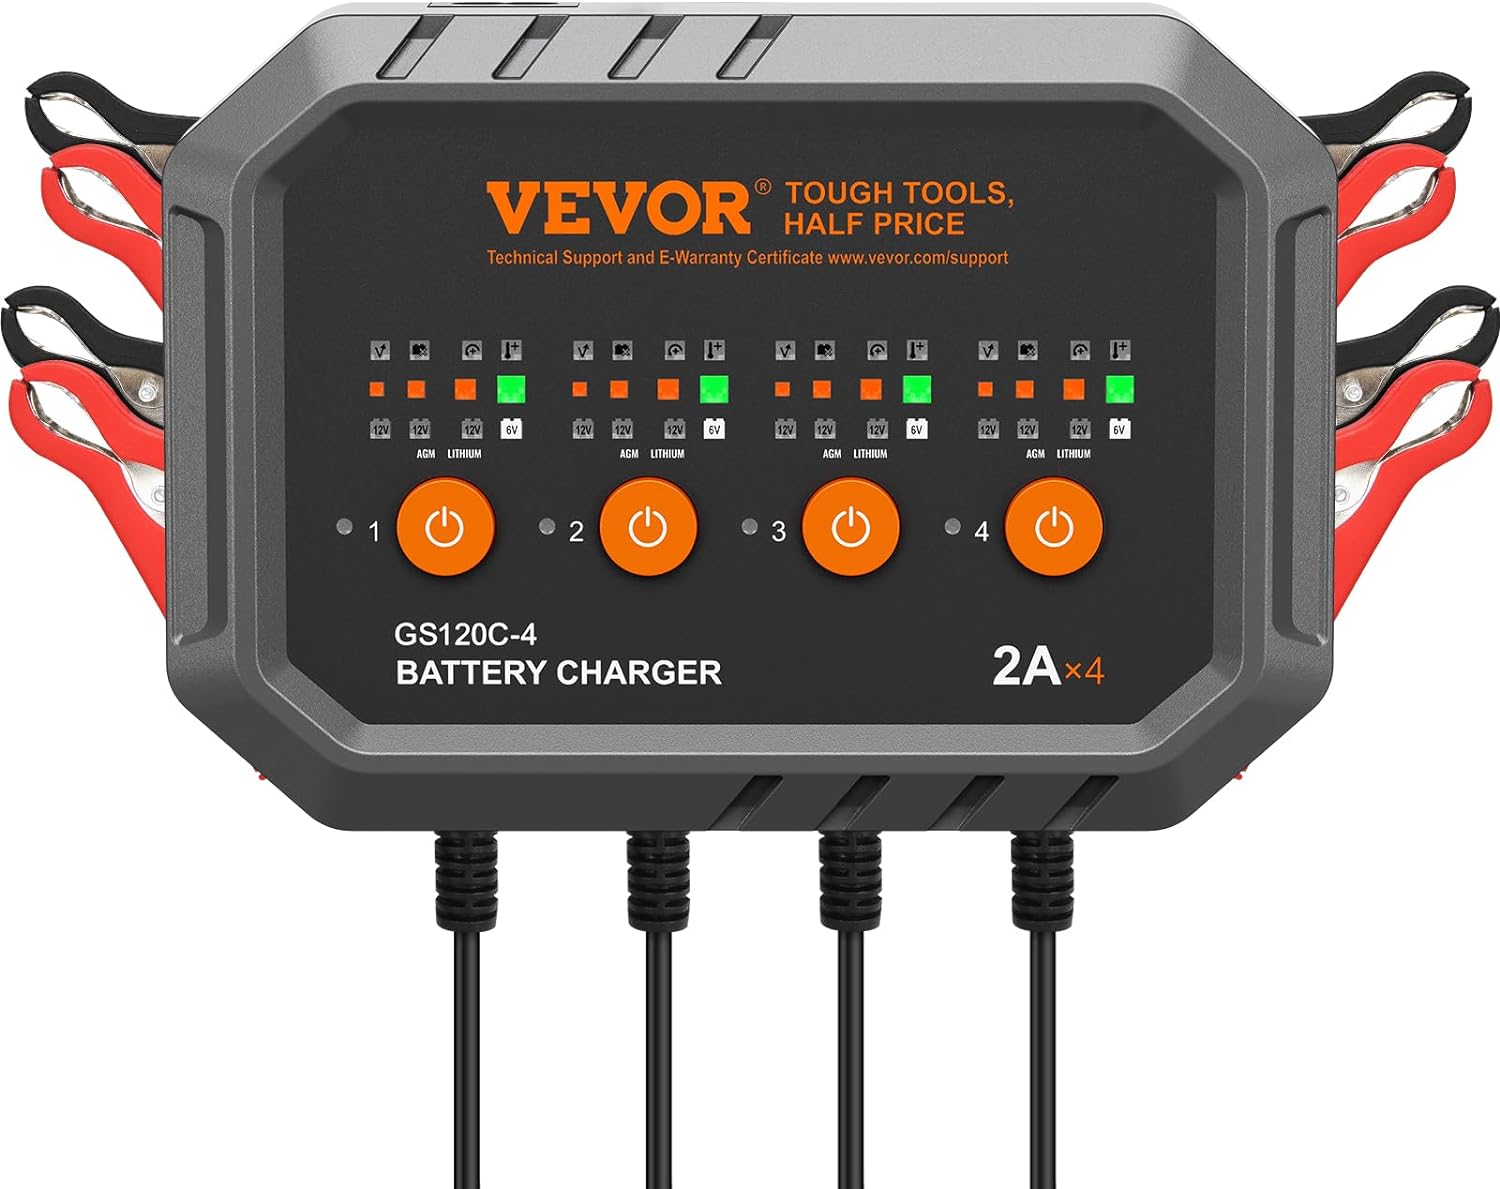 VEVOR Smart Battery Charger Review